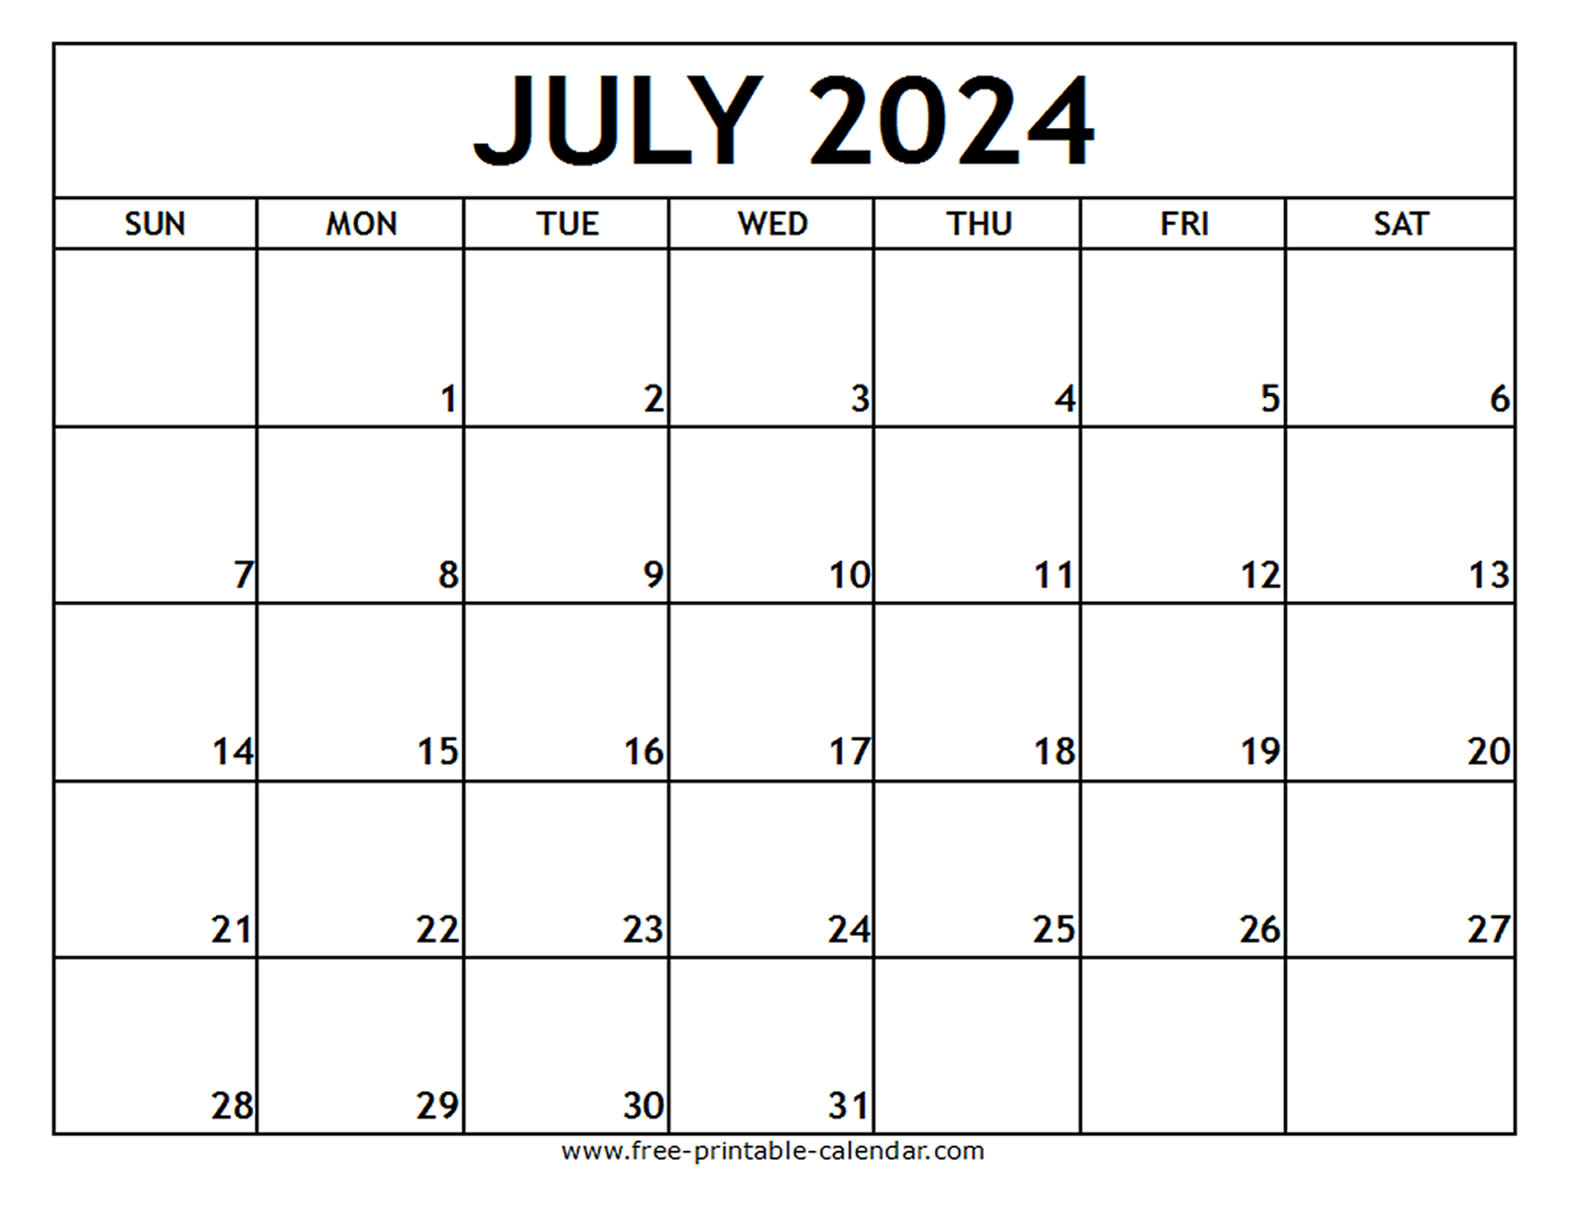 July 2024 Printable Calendar - Free-Printable-Calendar regarding Free July Calendar 2024